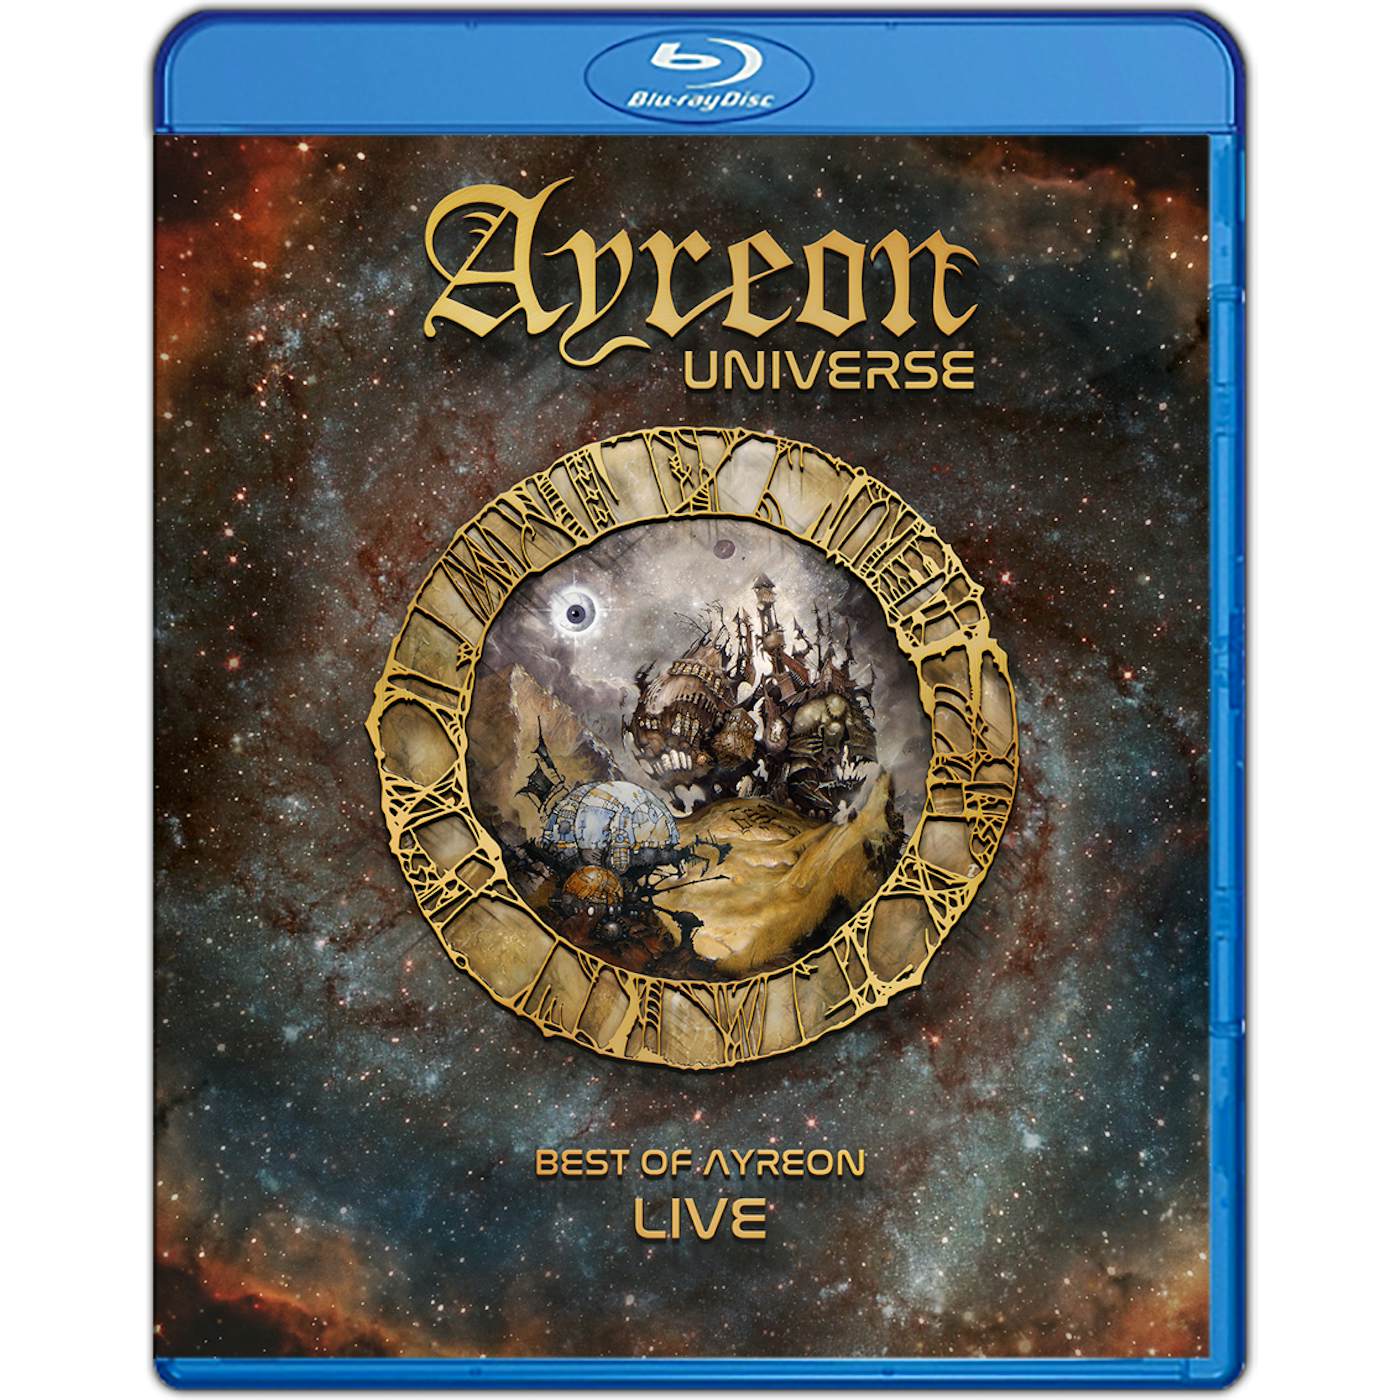 AYREON UNIVERSE Blu-ray